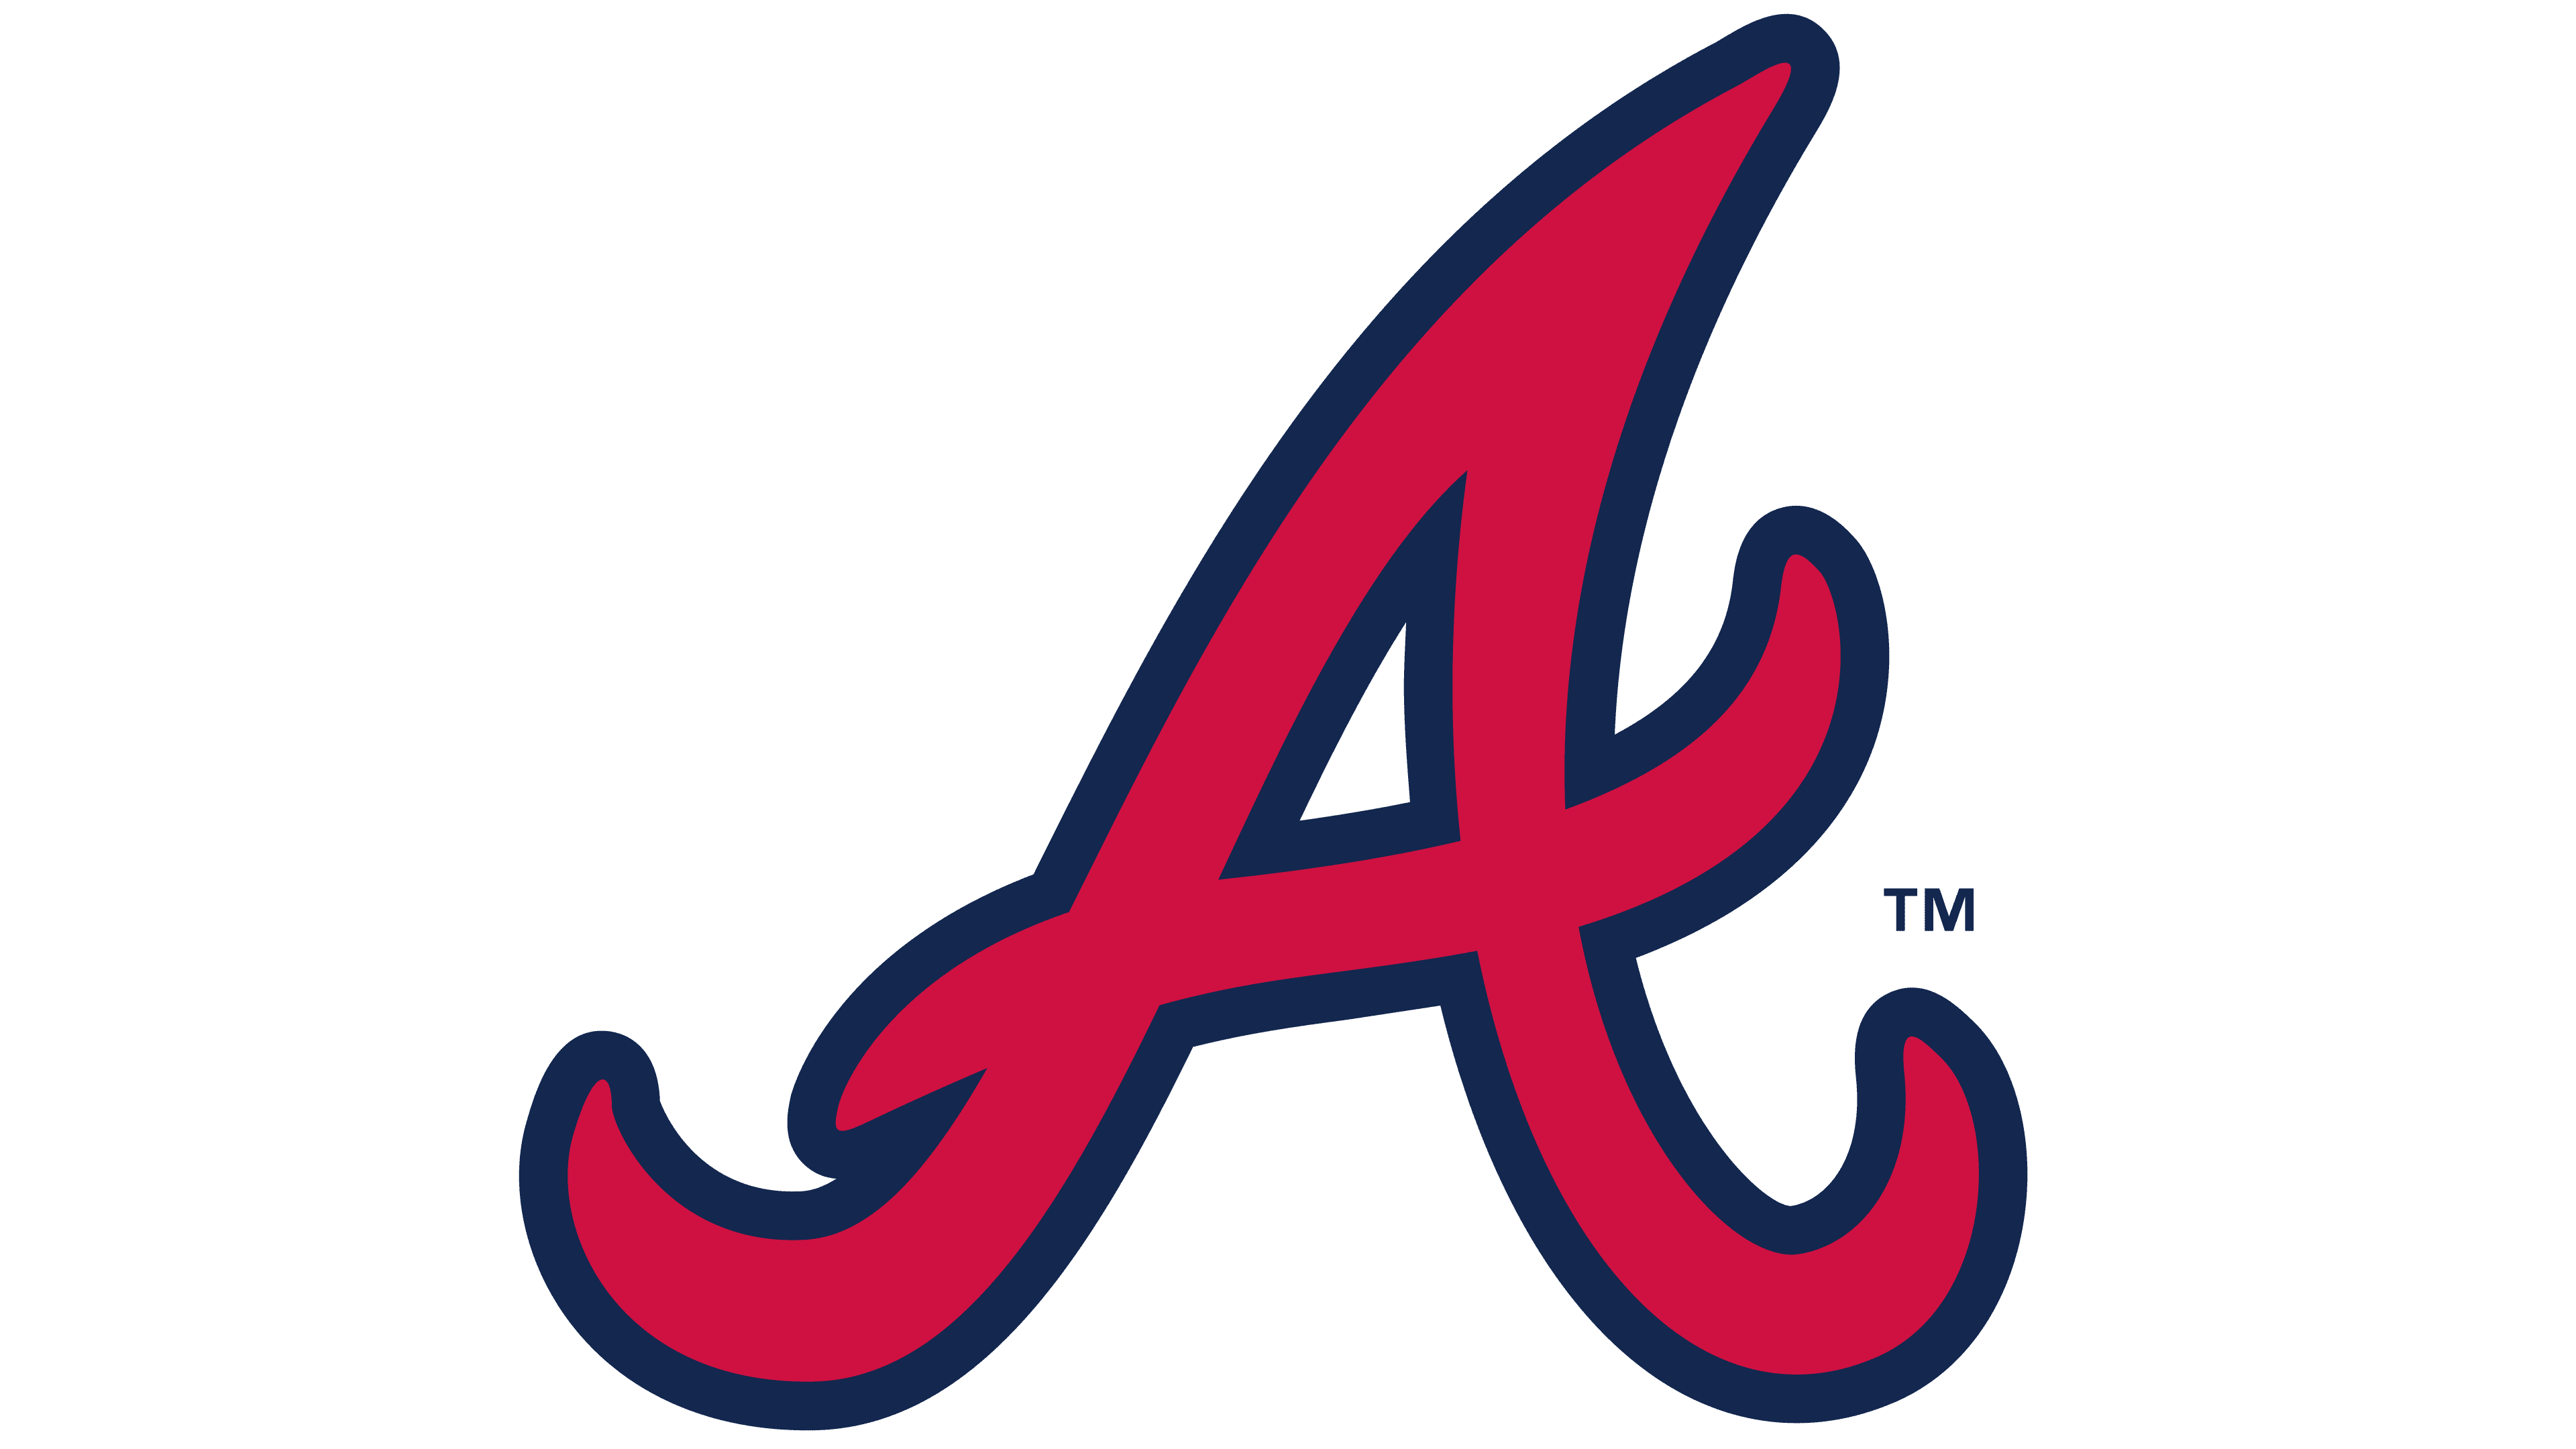 The Significant History of Atlanta Braves Logo